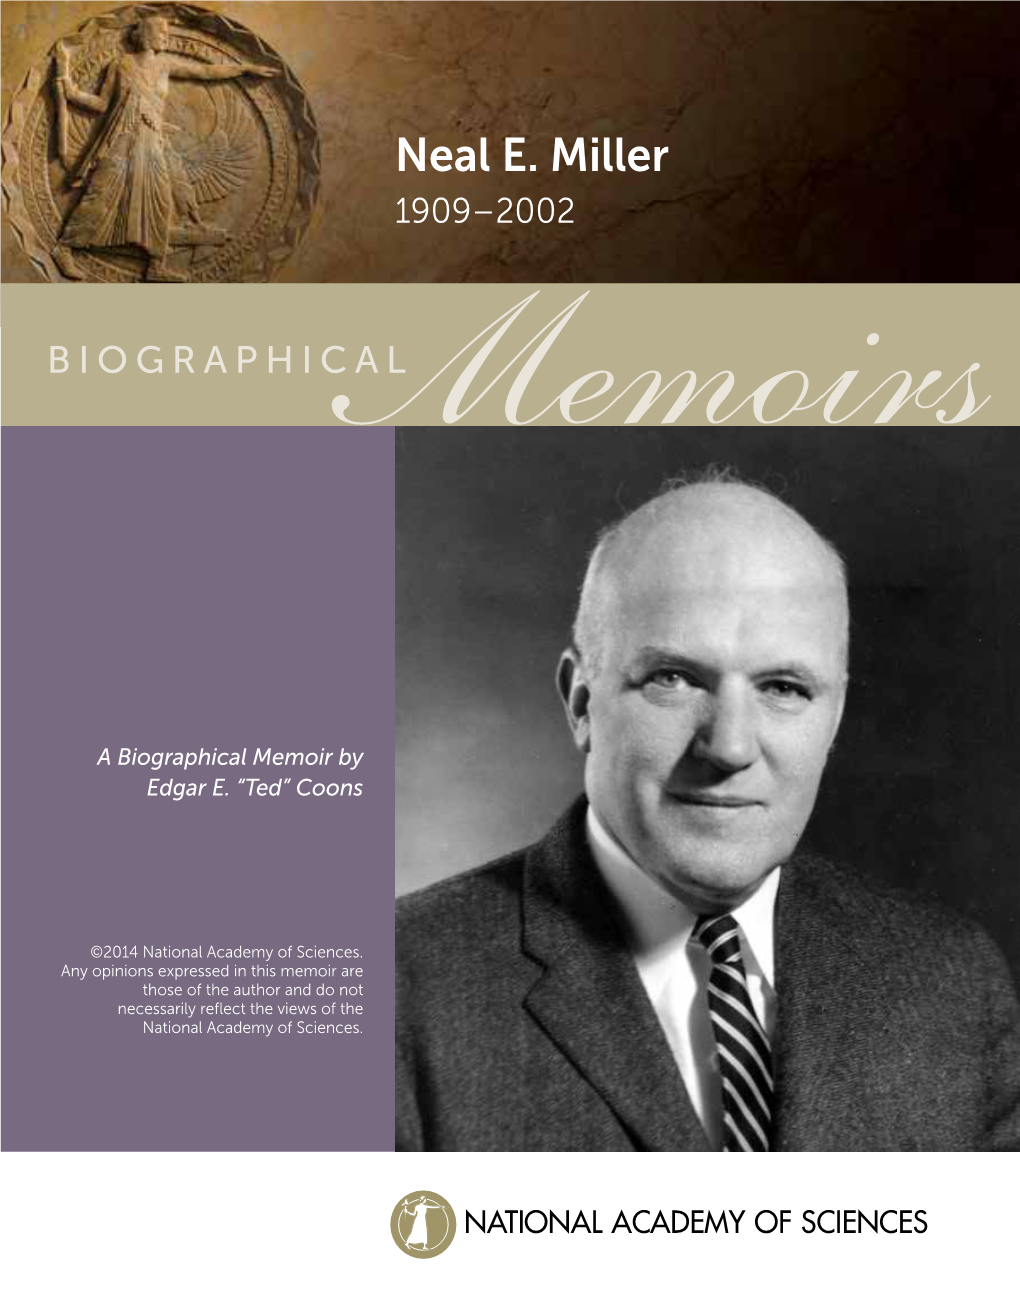 Biography of Neal E. Miller